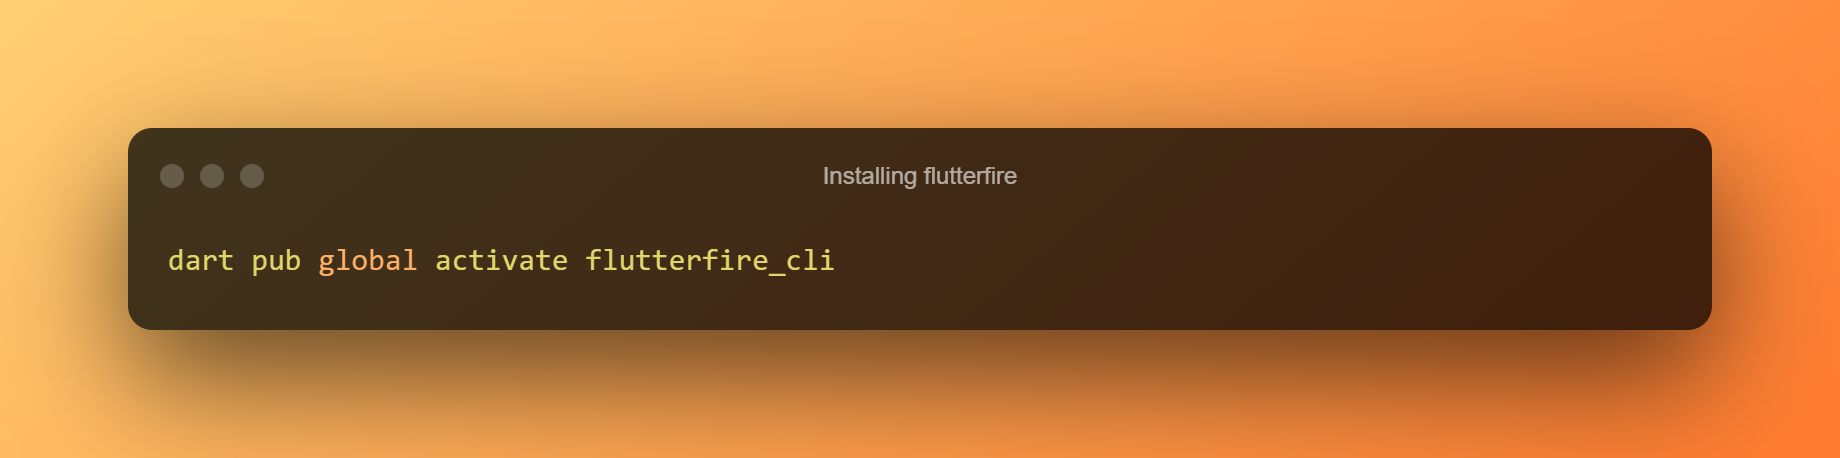 Installing Flutterfire